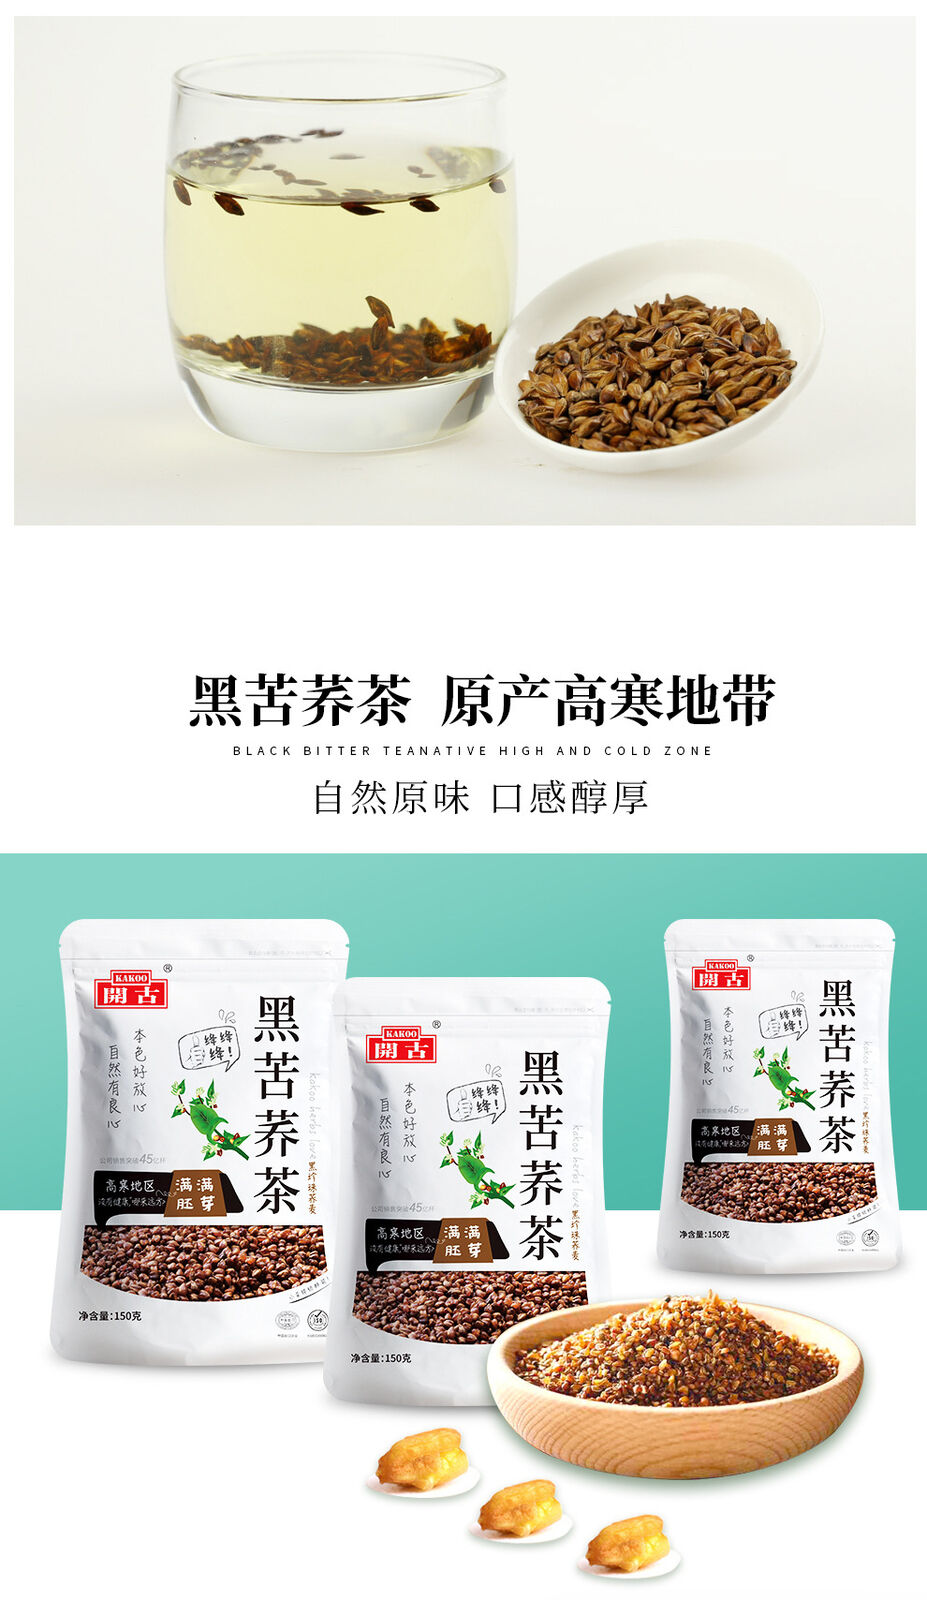 HelloYoung Small waist tea Liangshan black buckwheat tea whole malt buckwheat tea 150g